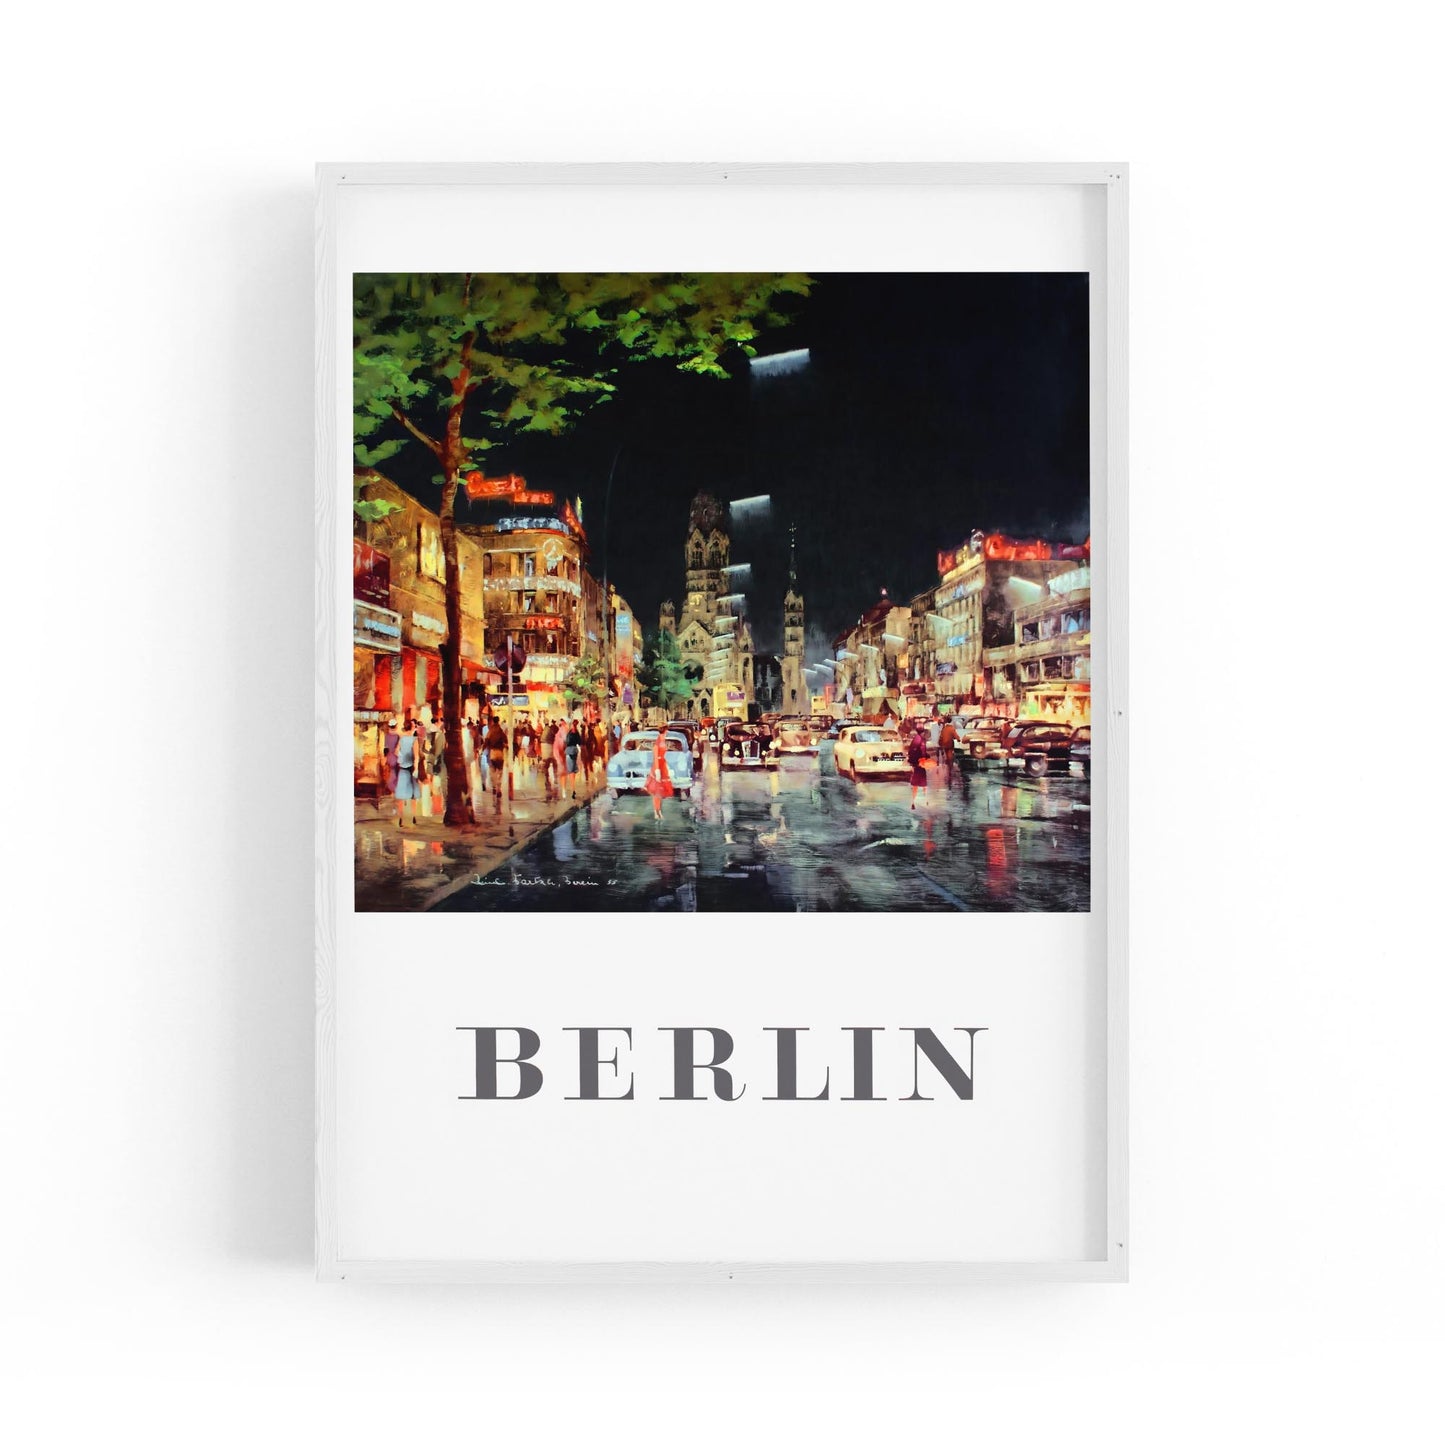 Berlin, Germany by Night by Reinhard Bartsch | Framed Vintage Travel Poster